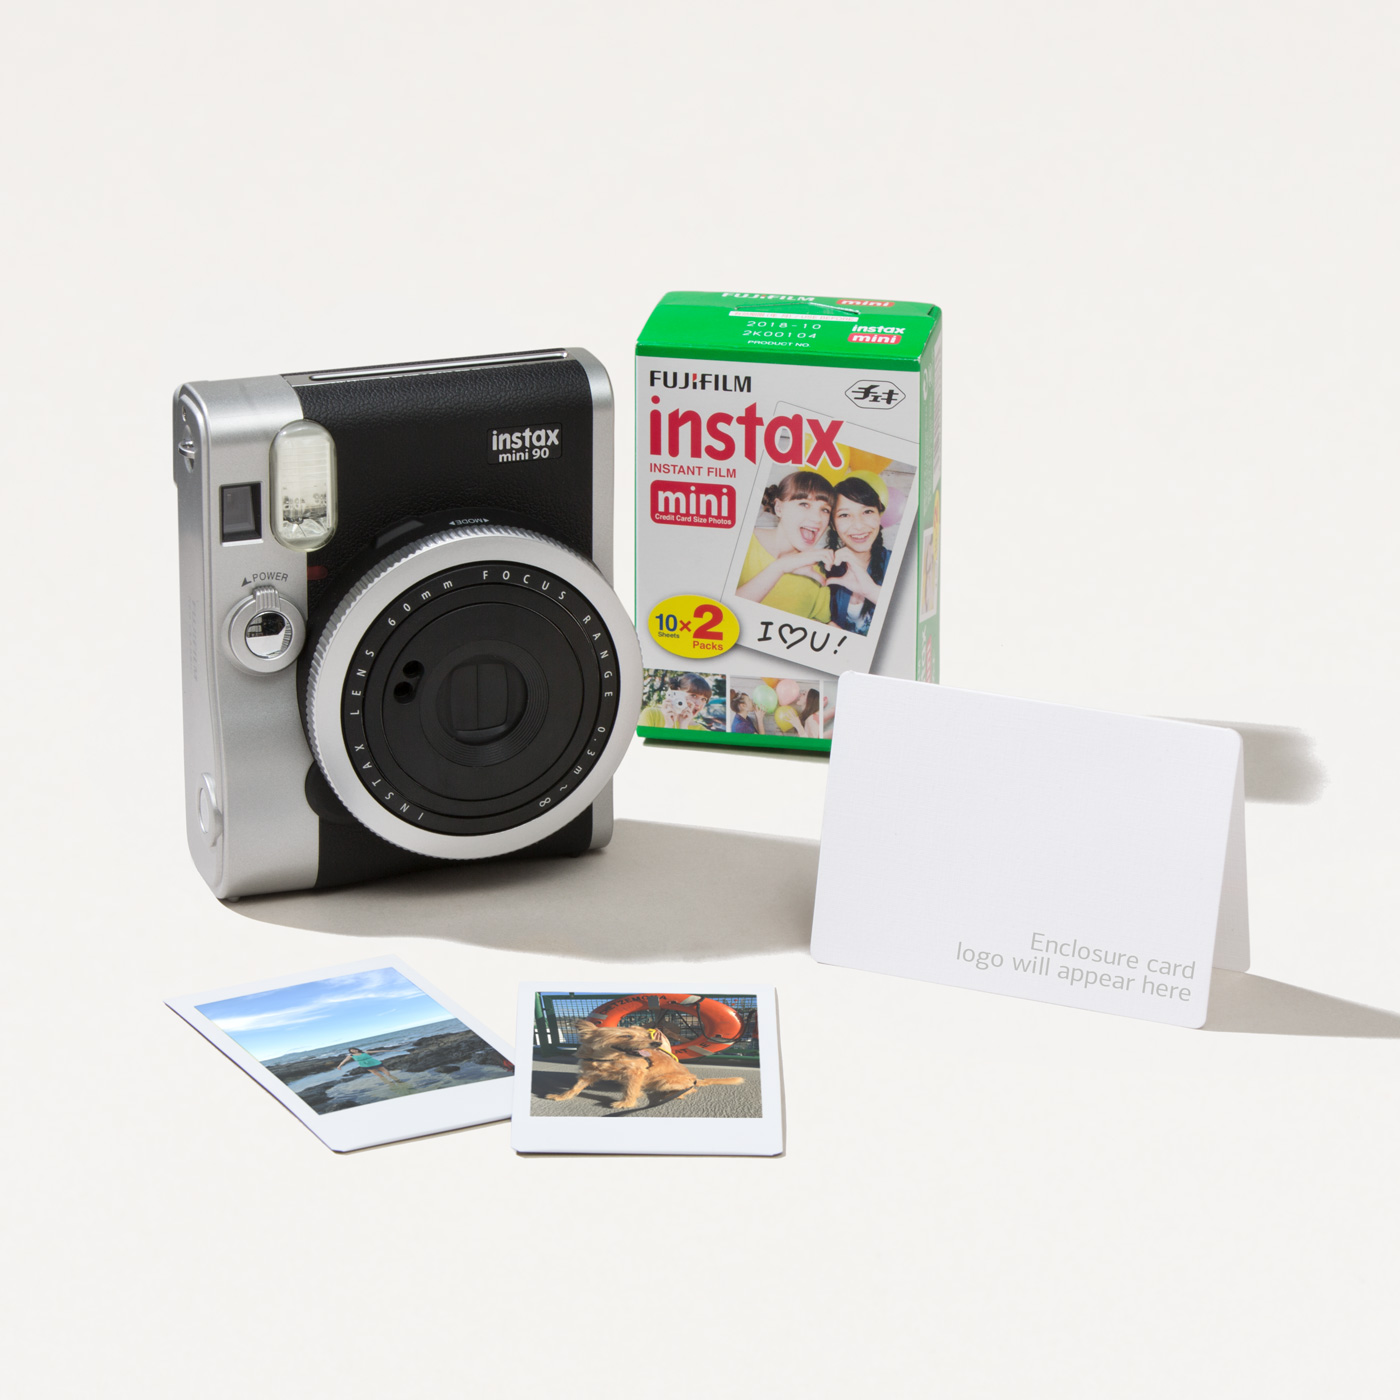 FujiFilm Instax Mini Neo Classic Camera and Film Set | Bank of America